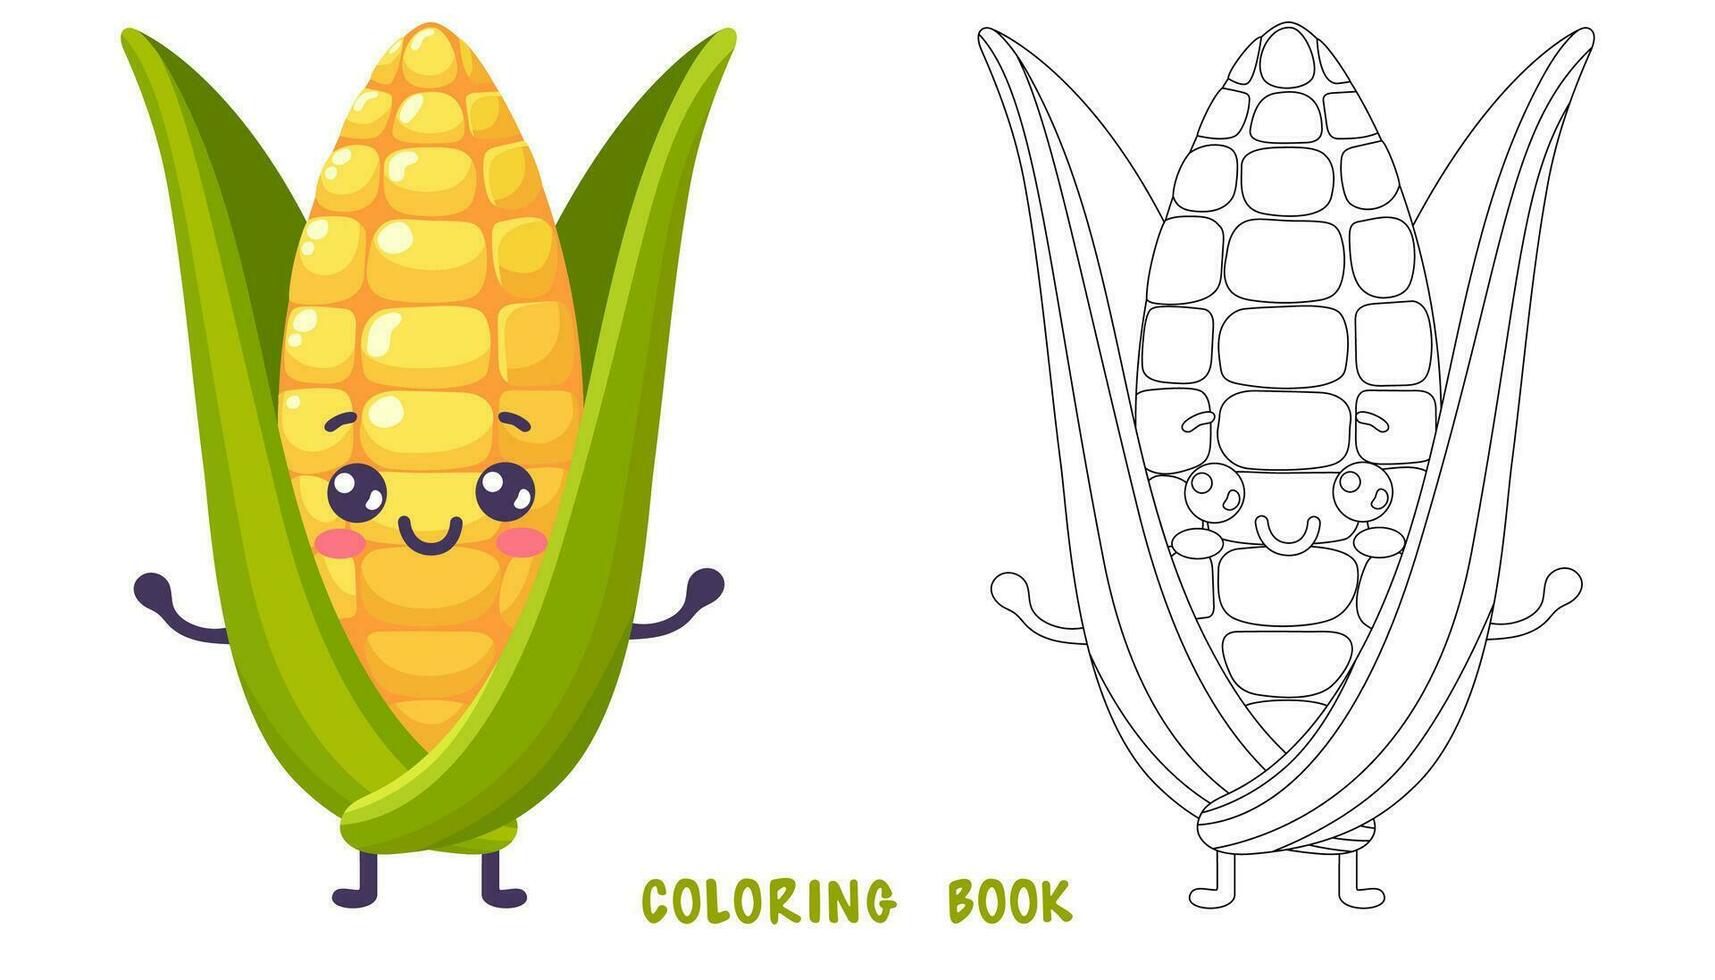 kleur boek van groovy tekenfilm grappig maïs vector